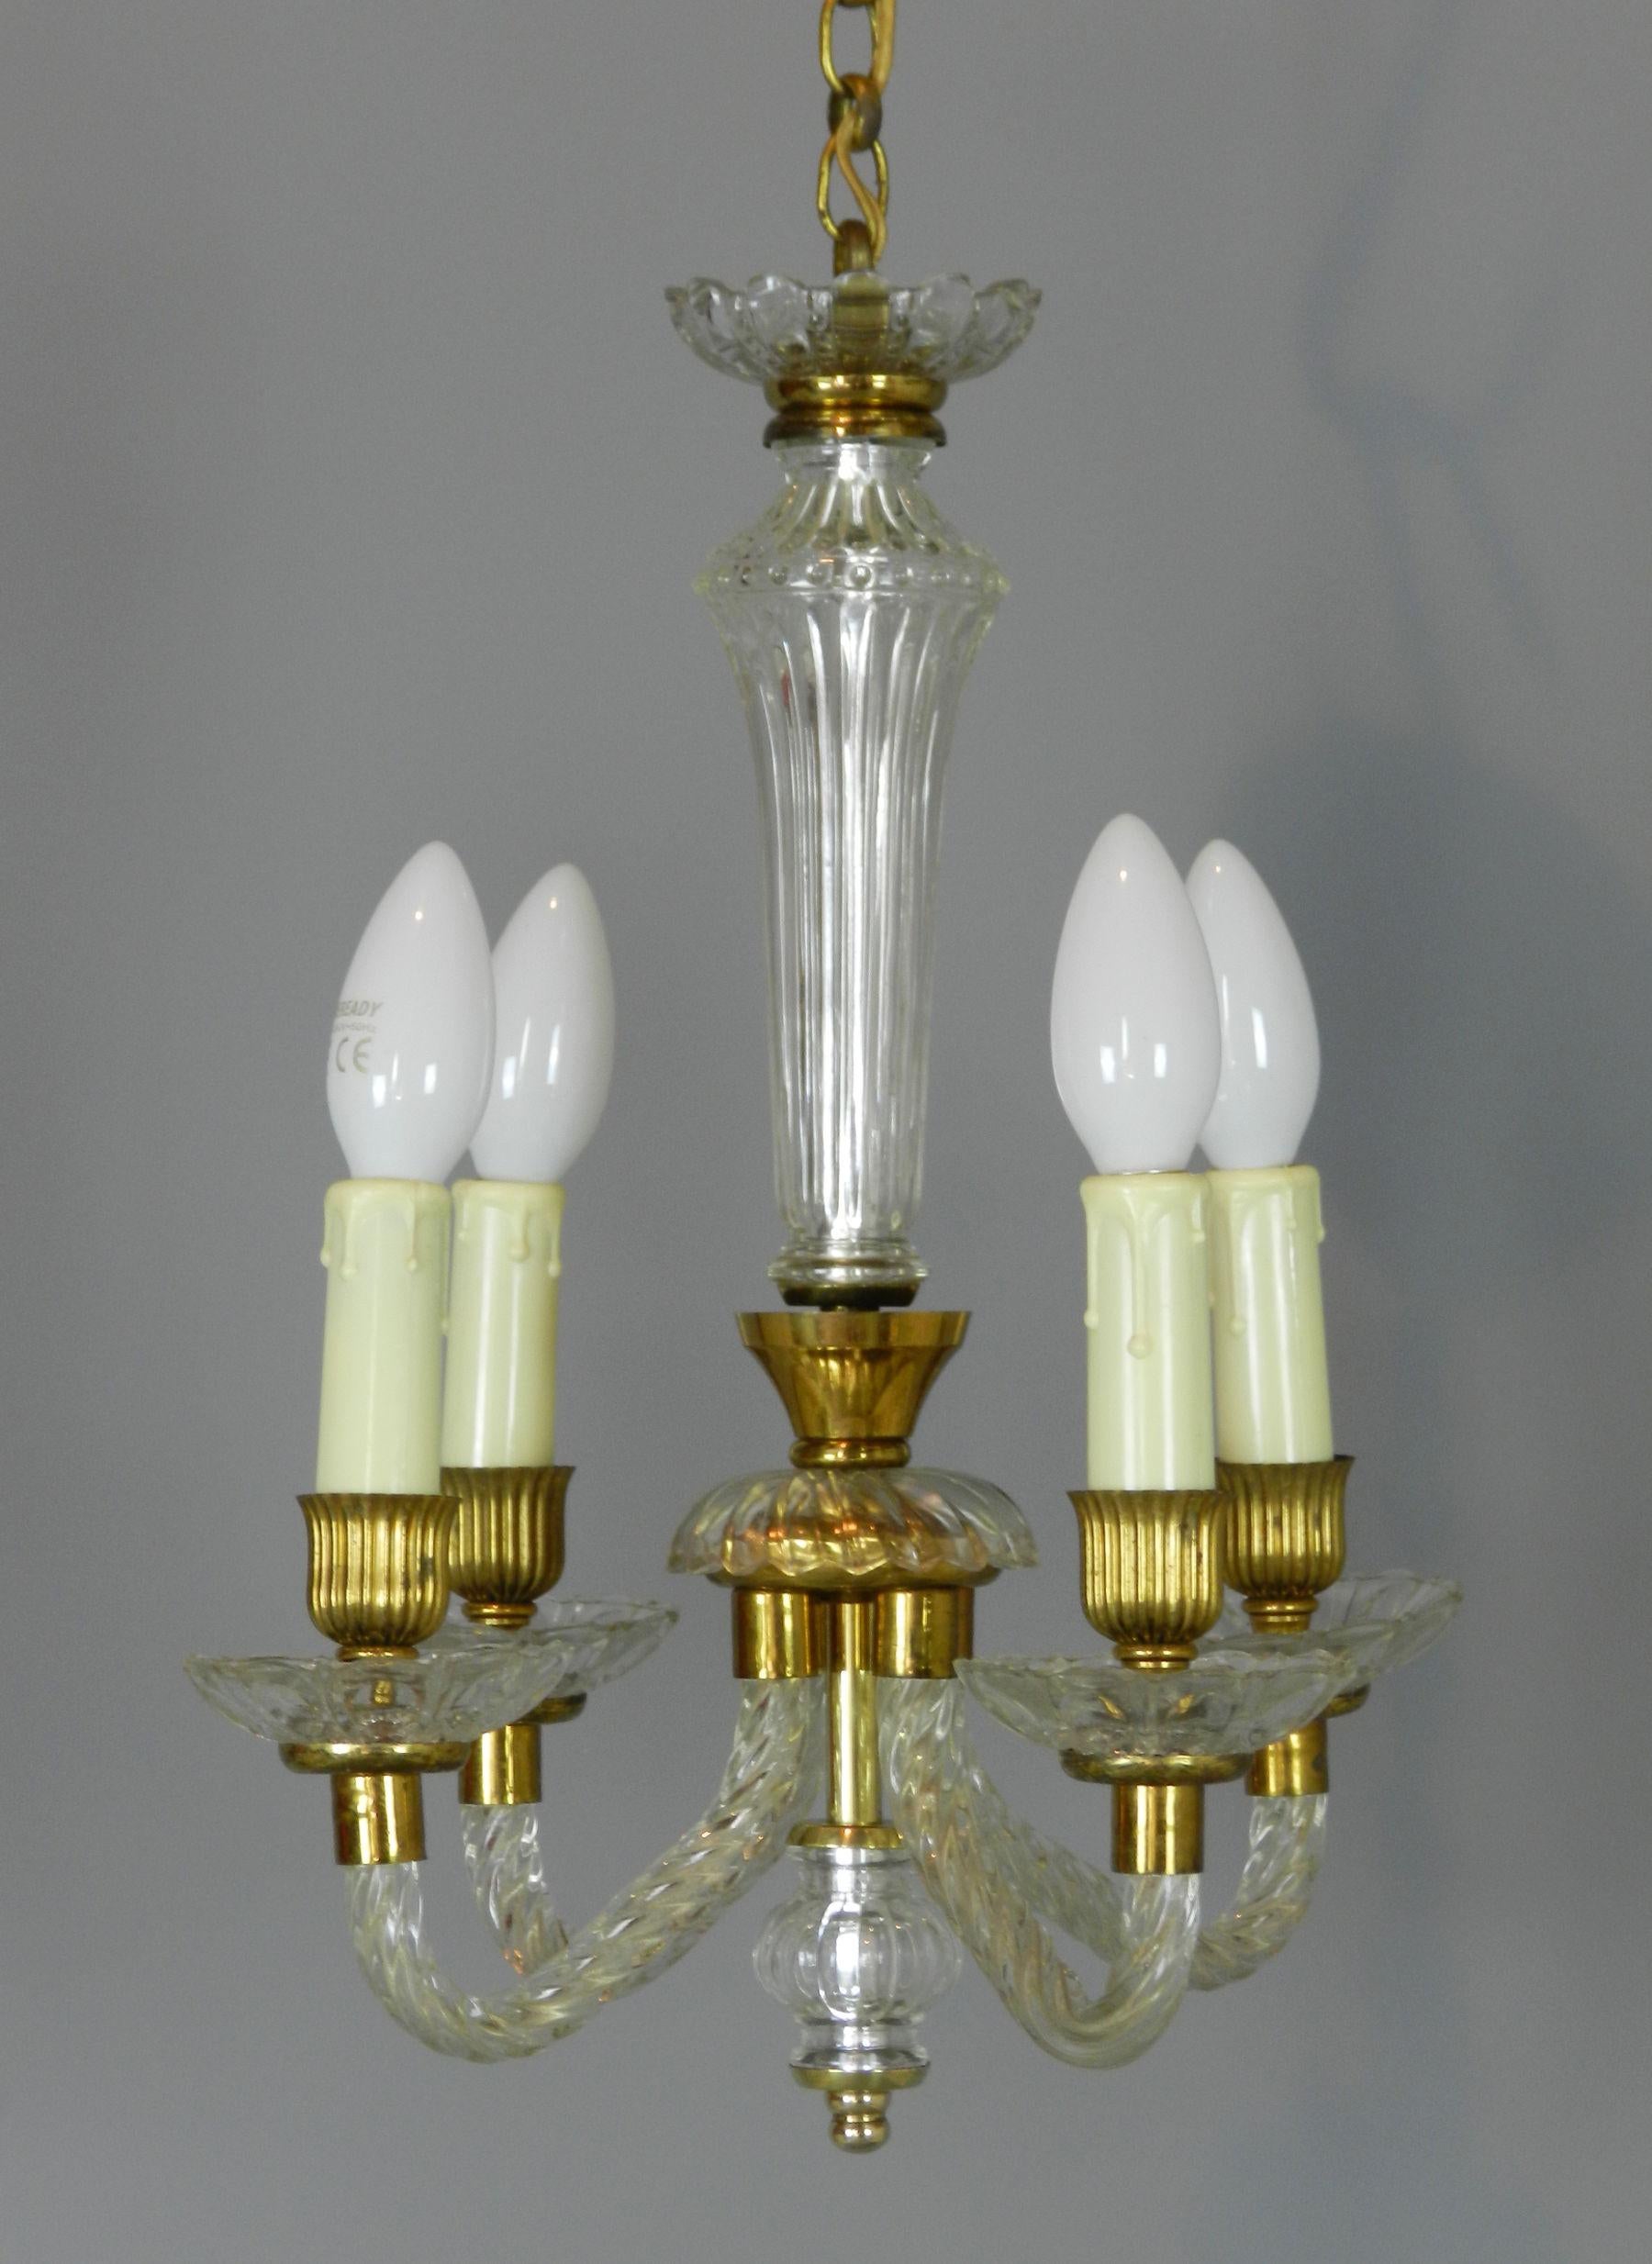 Anodized Pretty Murano Glass Chandelier For Sale